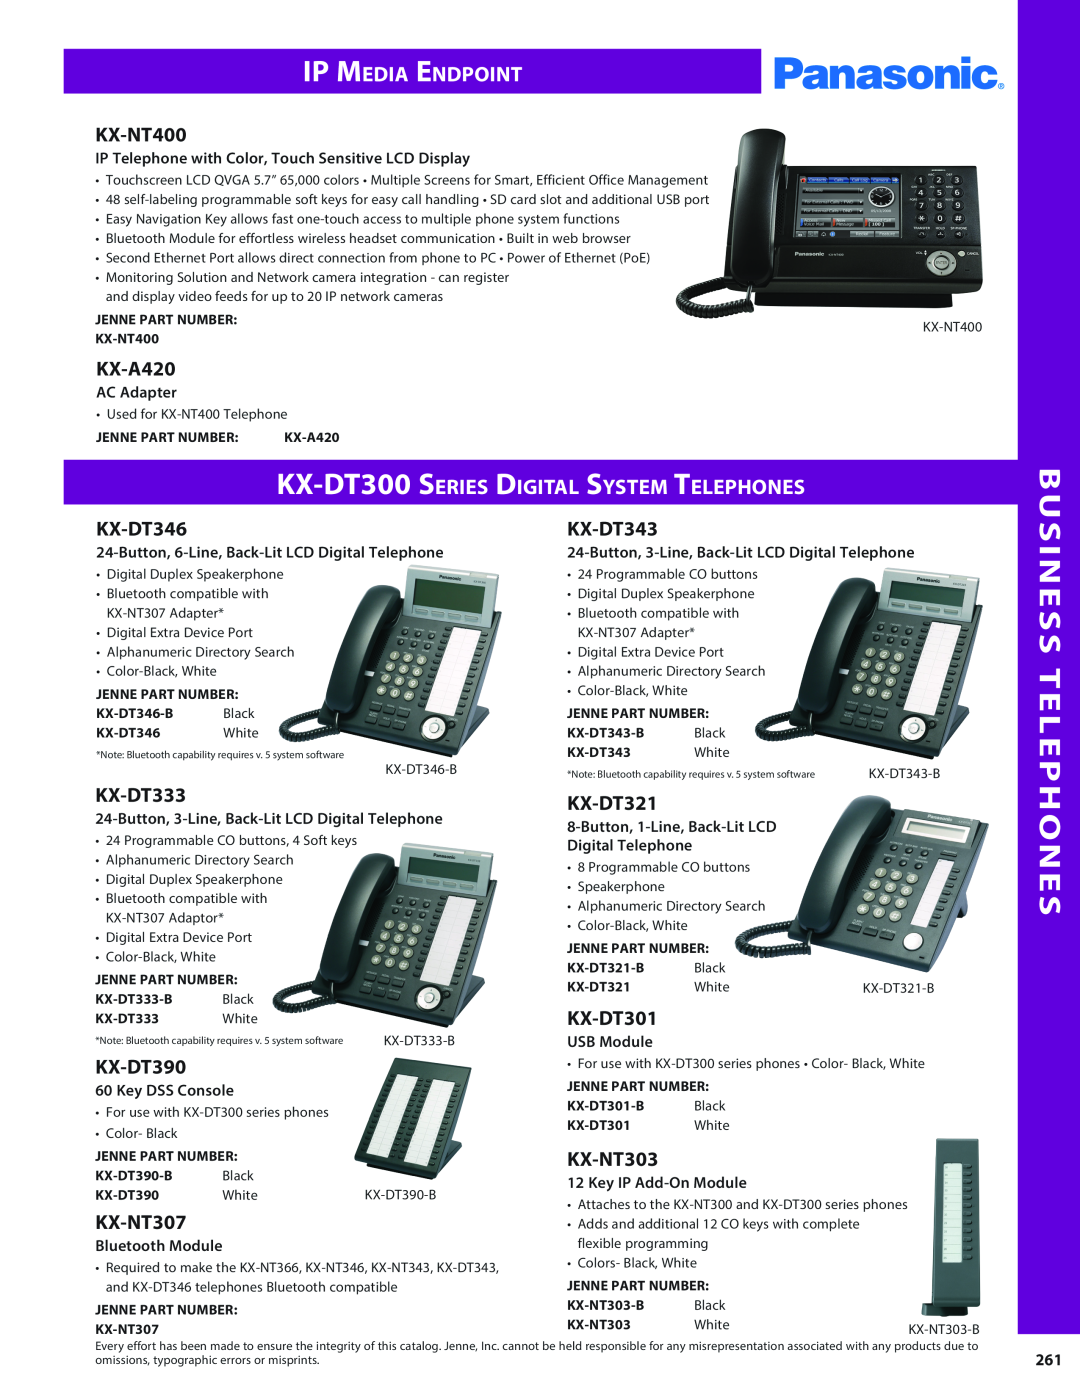 Panasonic PMPU2000 manual Business, IP Media Endpoint, KX-DT300Series Digital System Telephones 